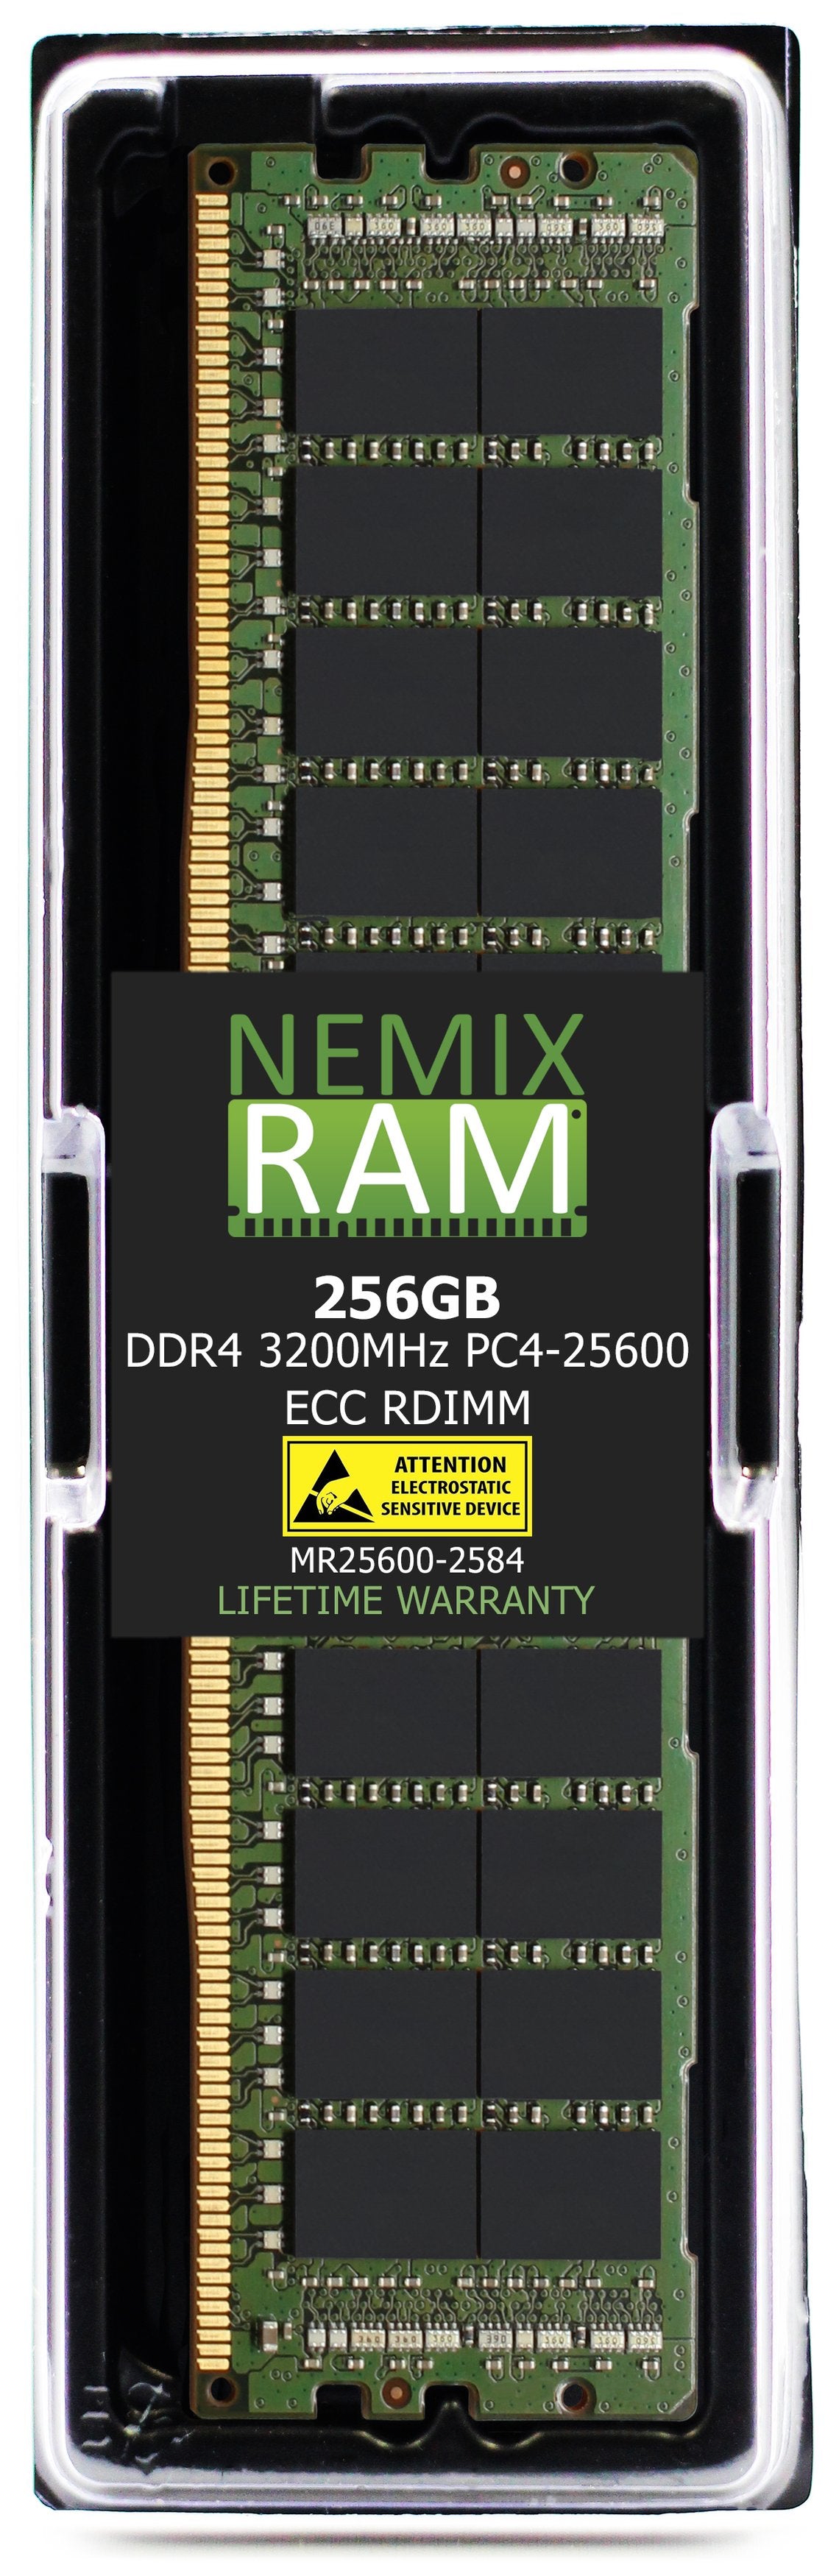 Hynix HMAT14JXSRB120N 256GB DDR4 3200MHZ PC4-25600 RDIMM Compatible Memory Module